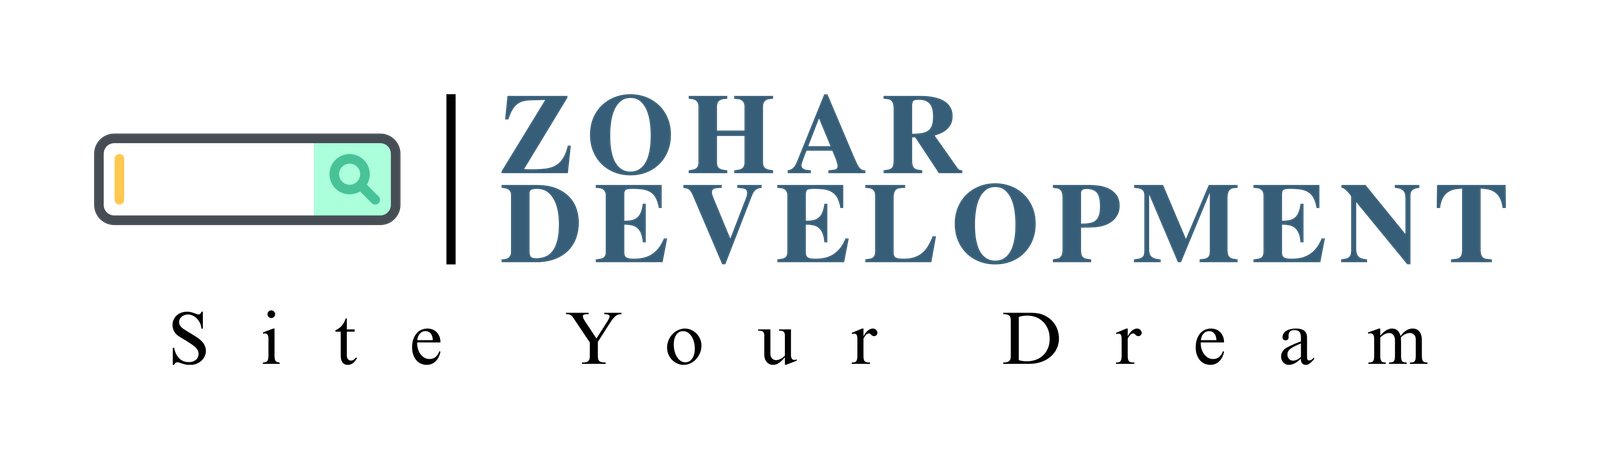 Zohar Development Logo